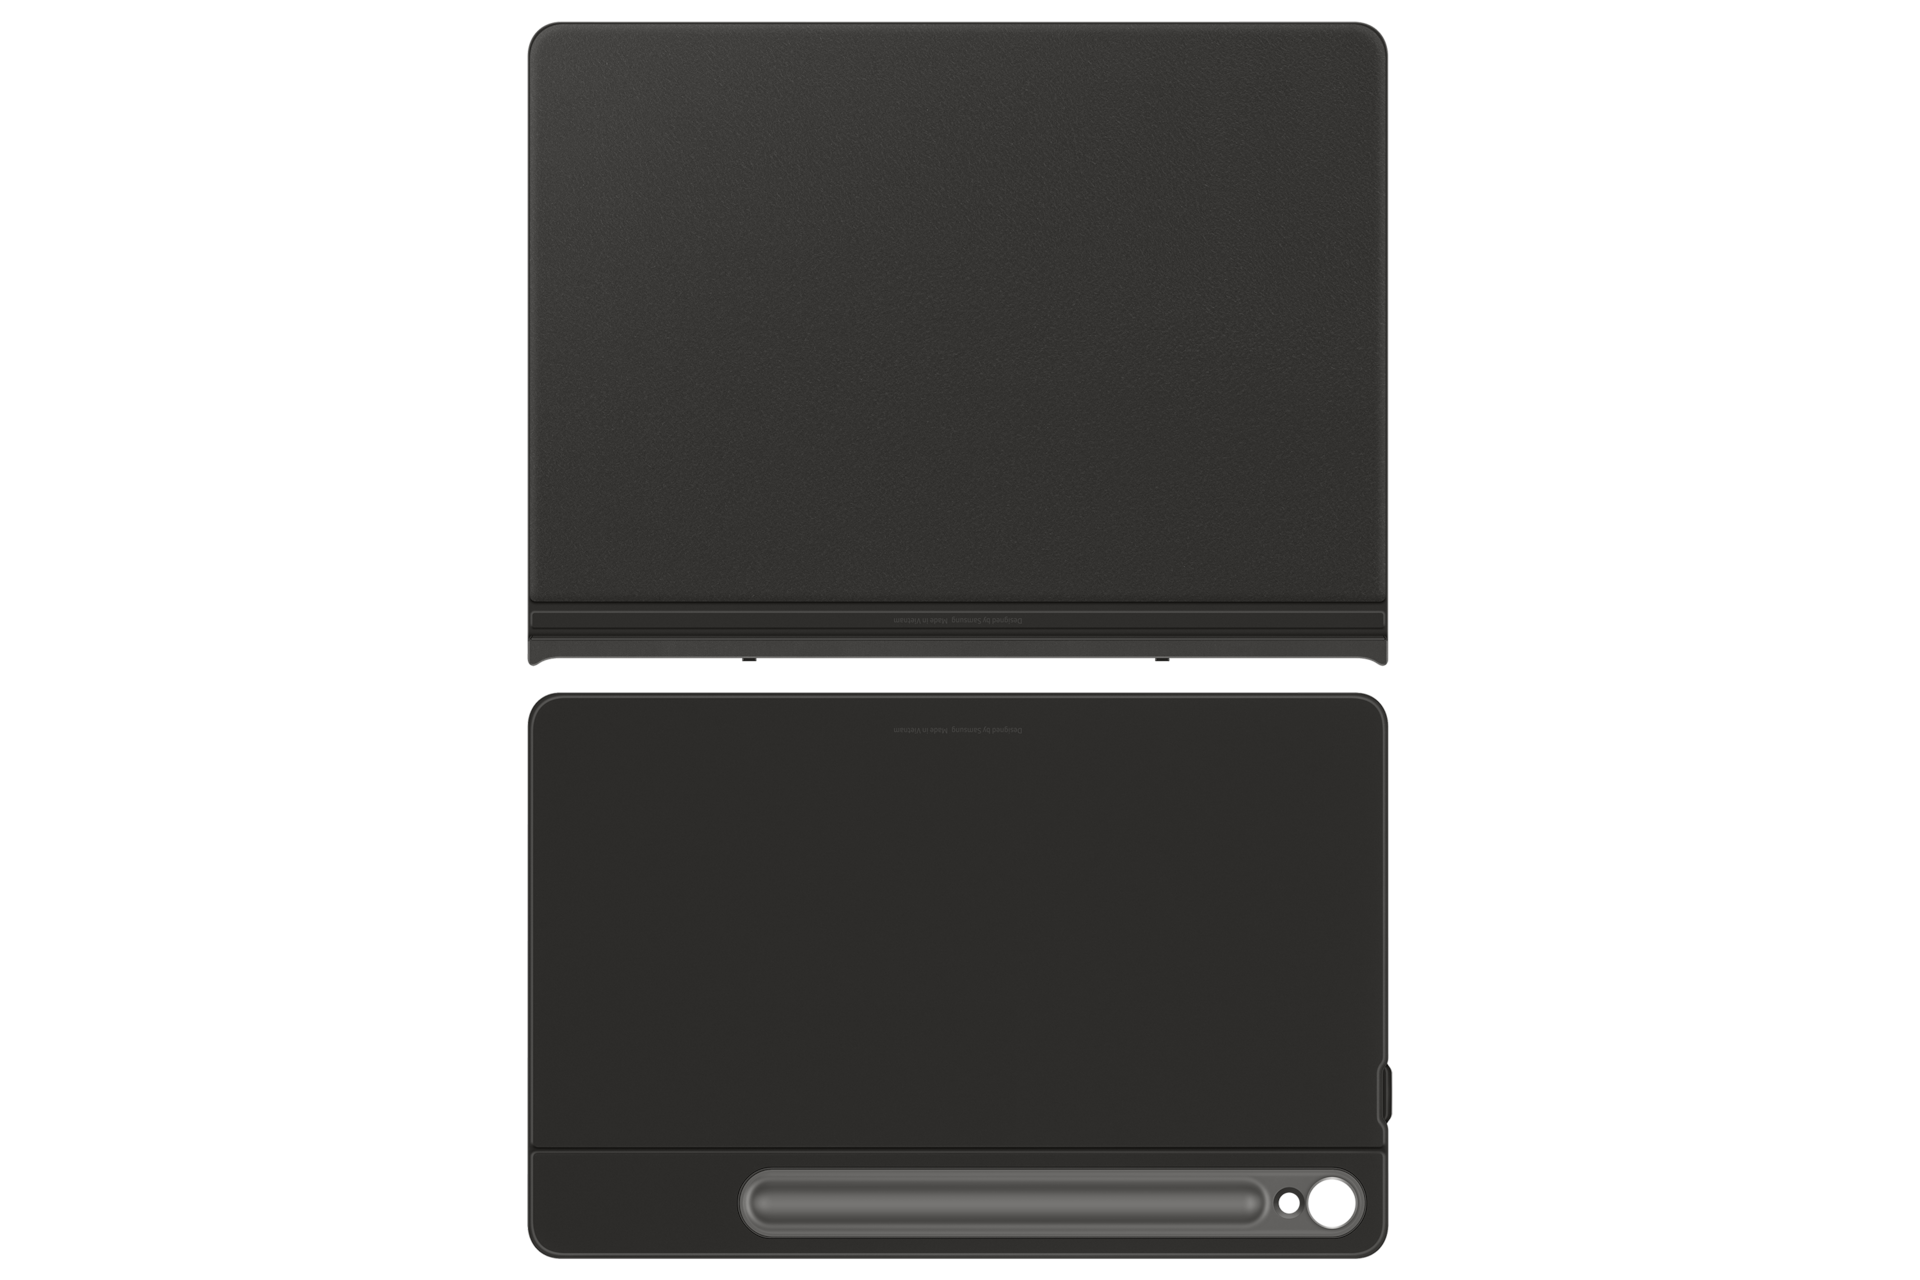 Book Cover Hybride Noir pour Galaxy Tab S9